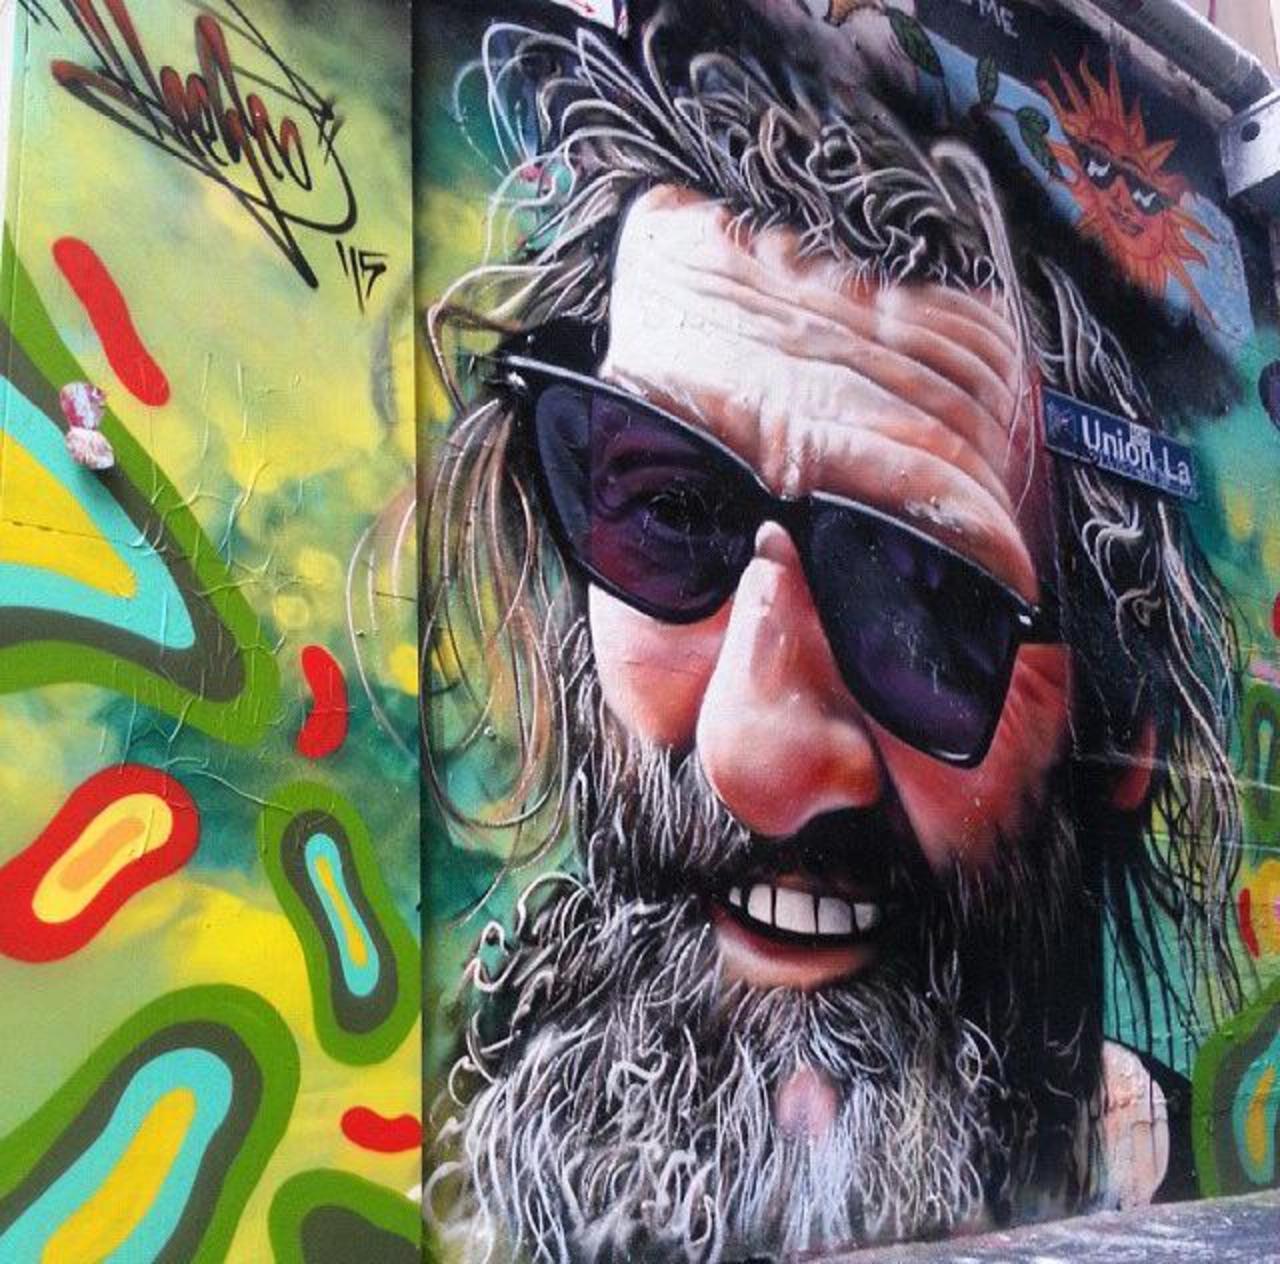 Street Art by Heesco in Melbourne 

#art #arte #graffiti #streetart http://t.co/iGp3QjtSqo